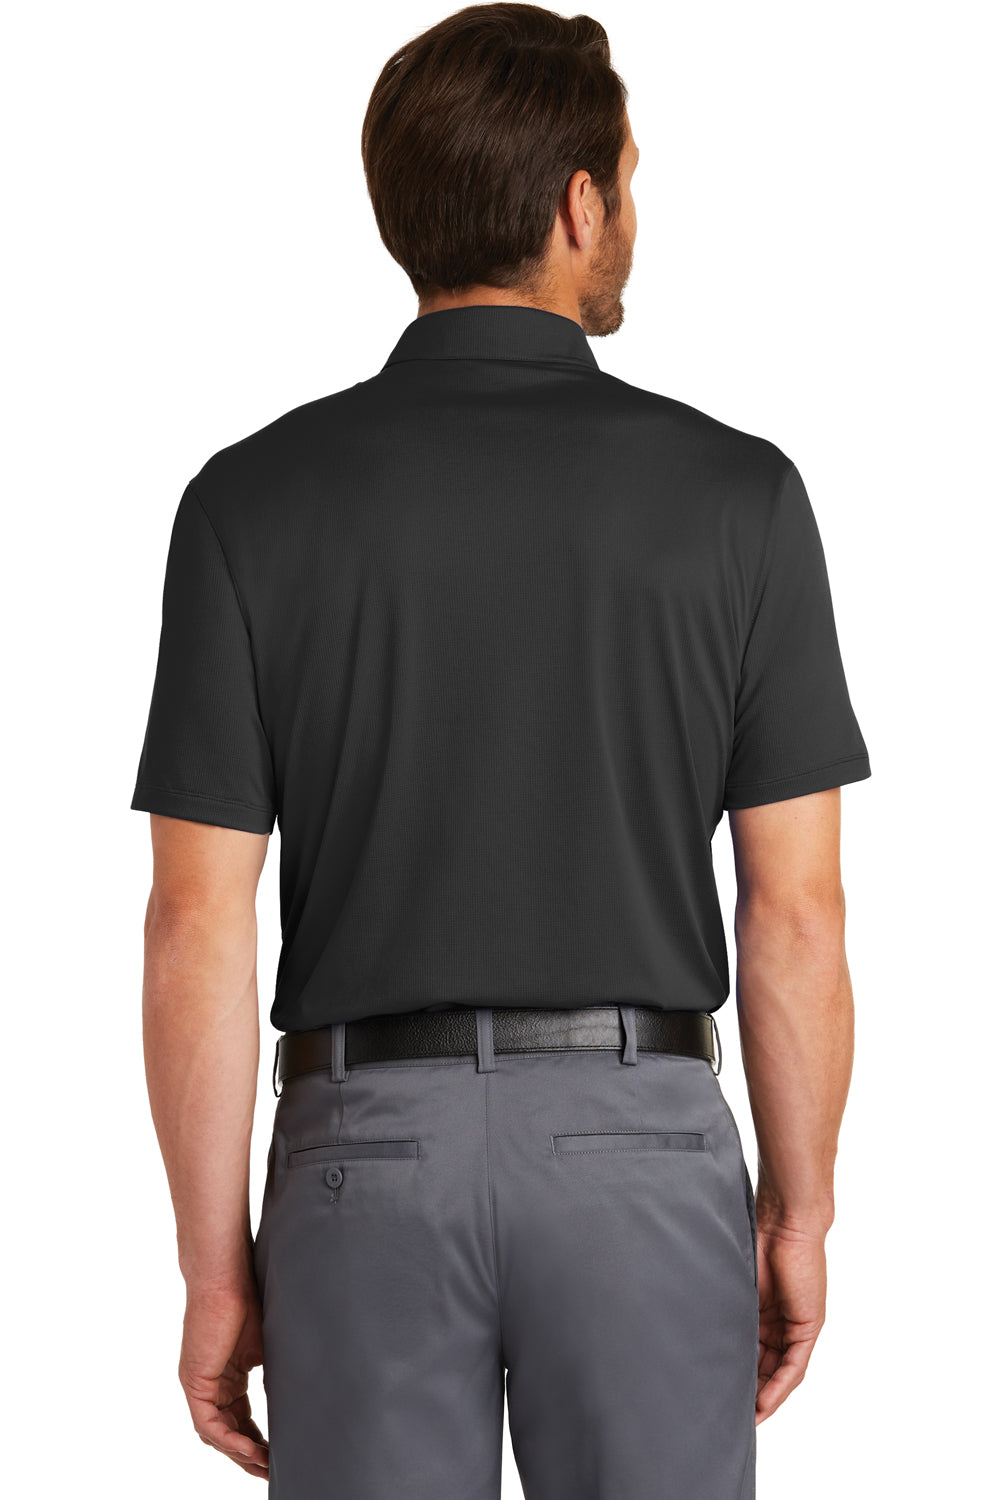 Nike 883681 Mens Legacy Dri-Fit Moisture Wicking Short Sleeve Polo Shirt Black Model Back